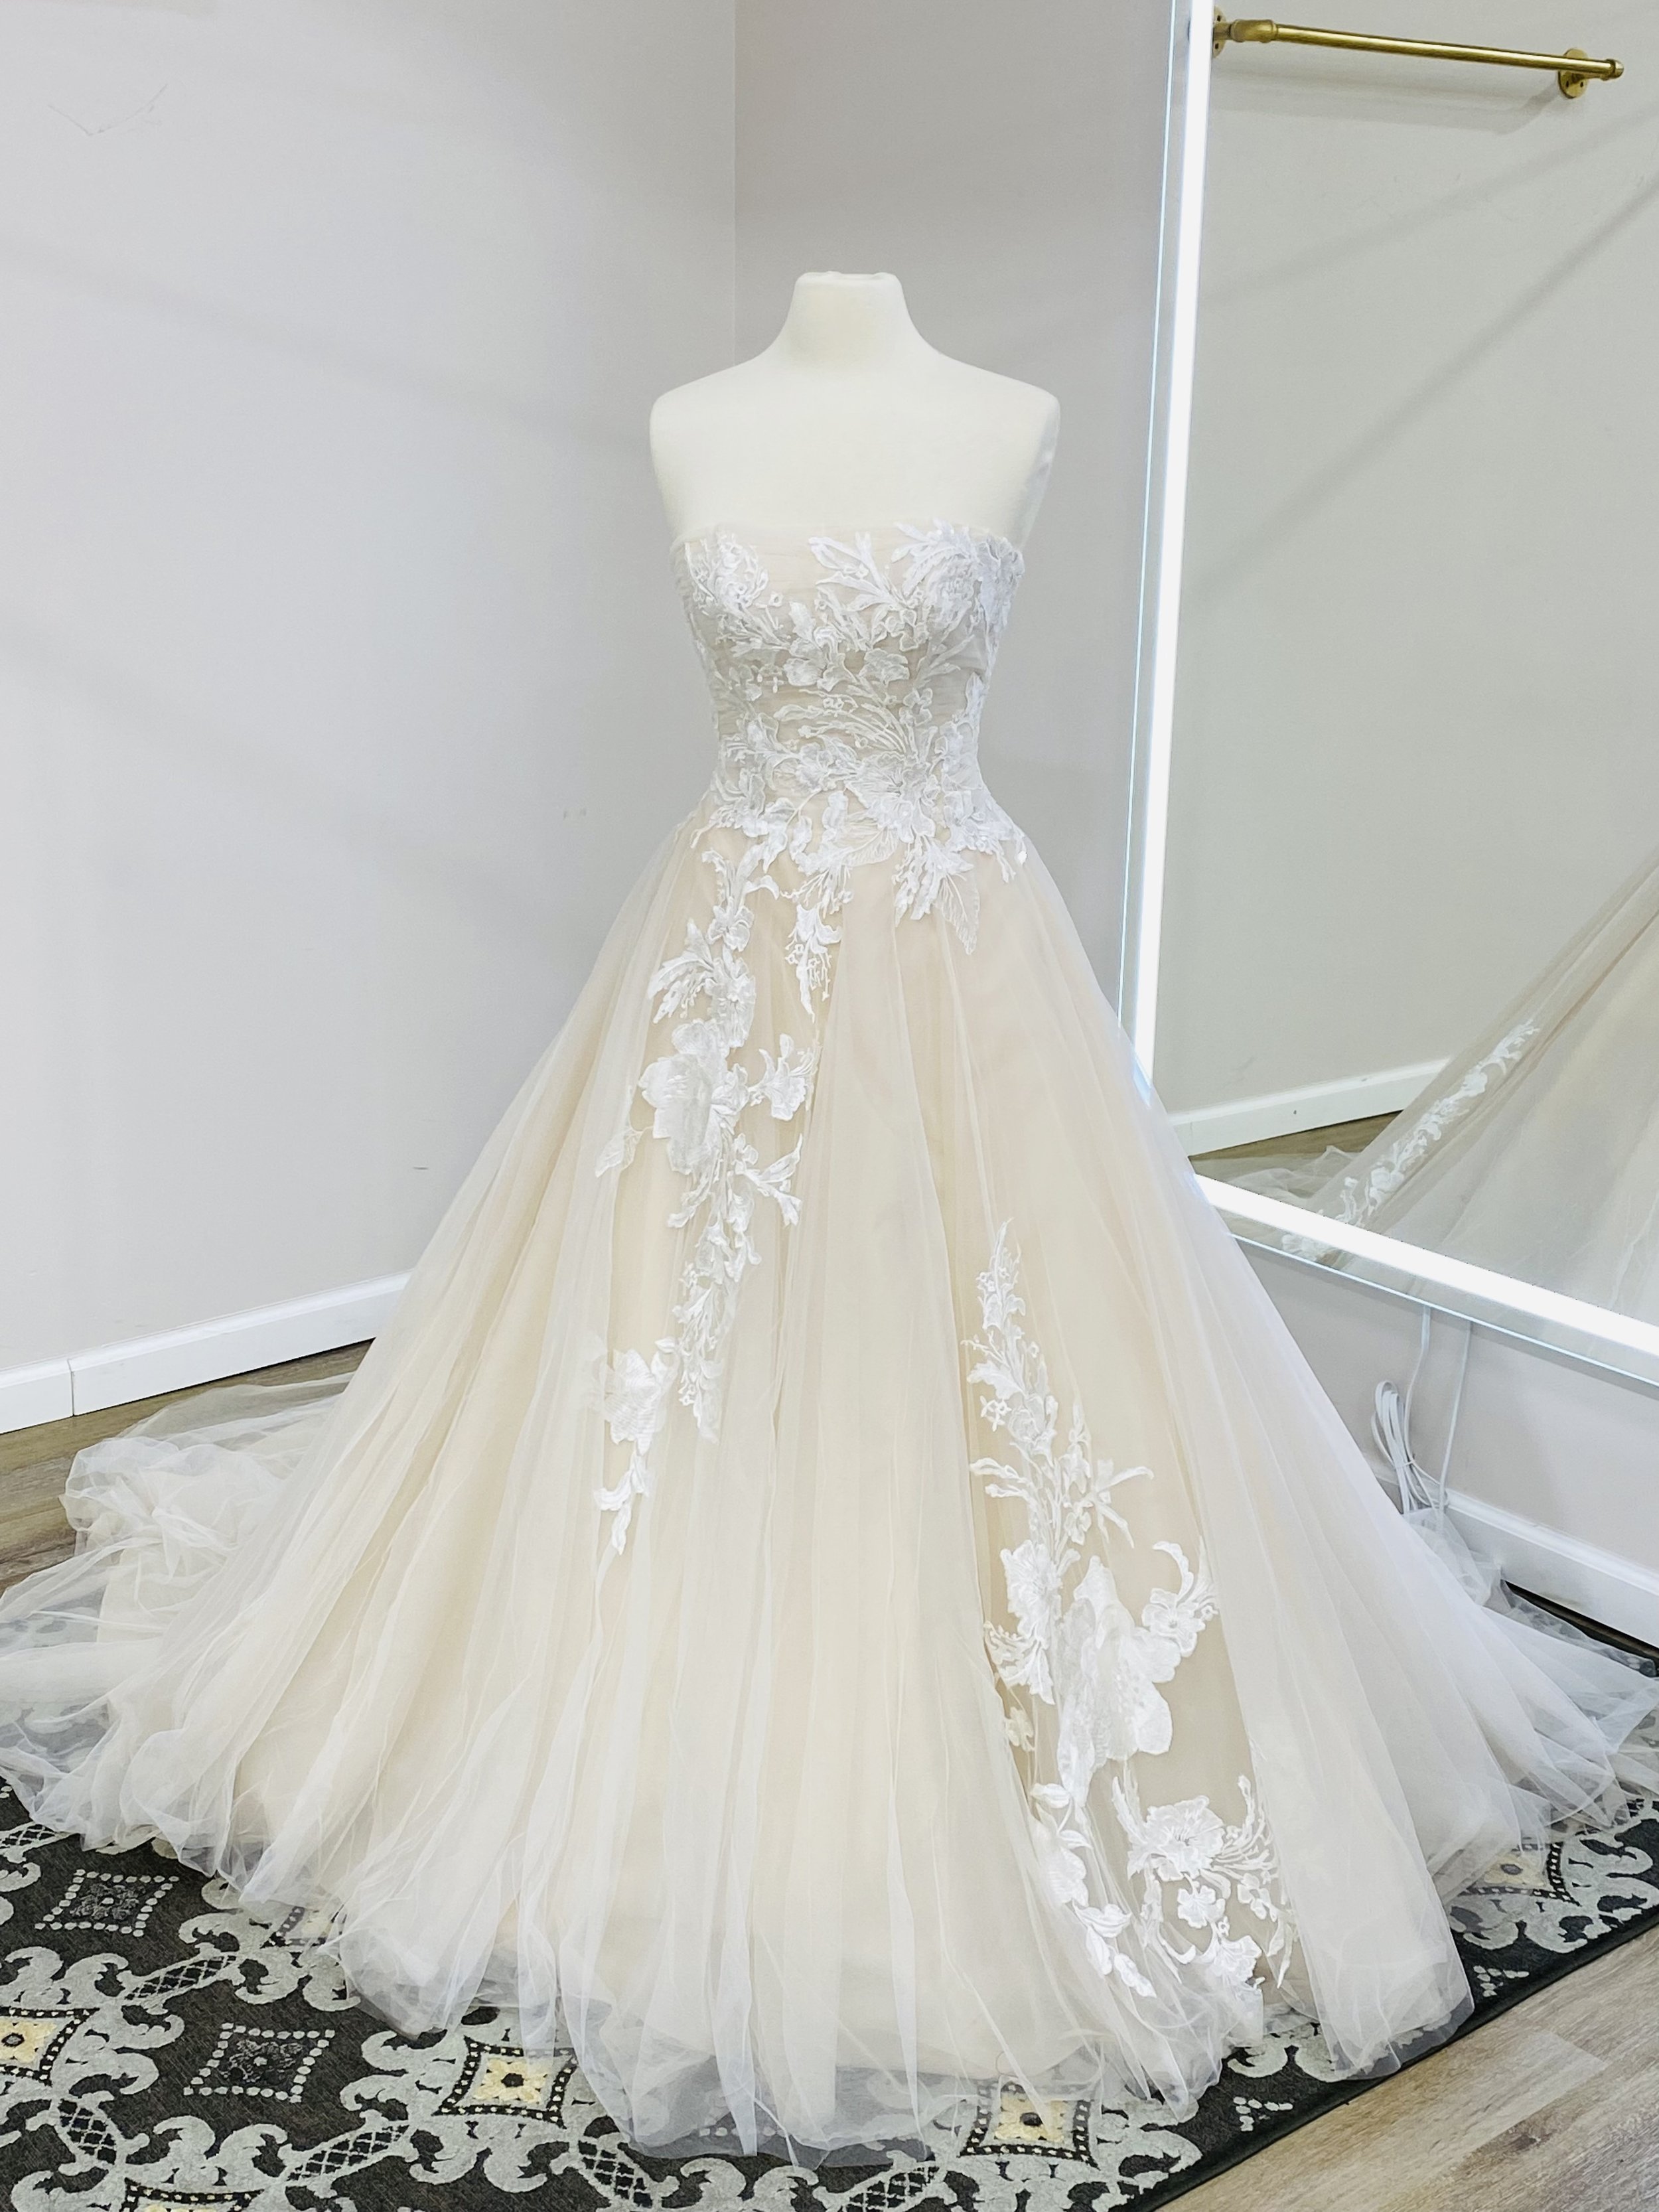 Pronovias Praciala Wedding Dress on Sale - Your Dream Dress ❤️